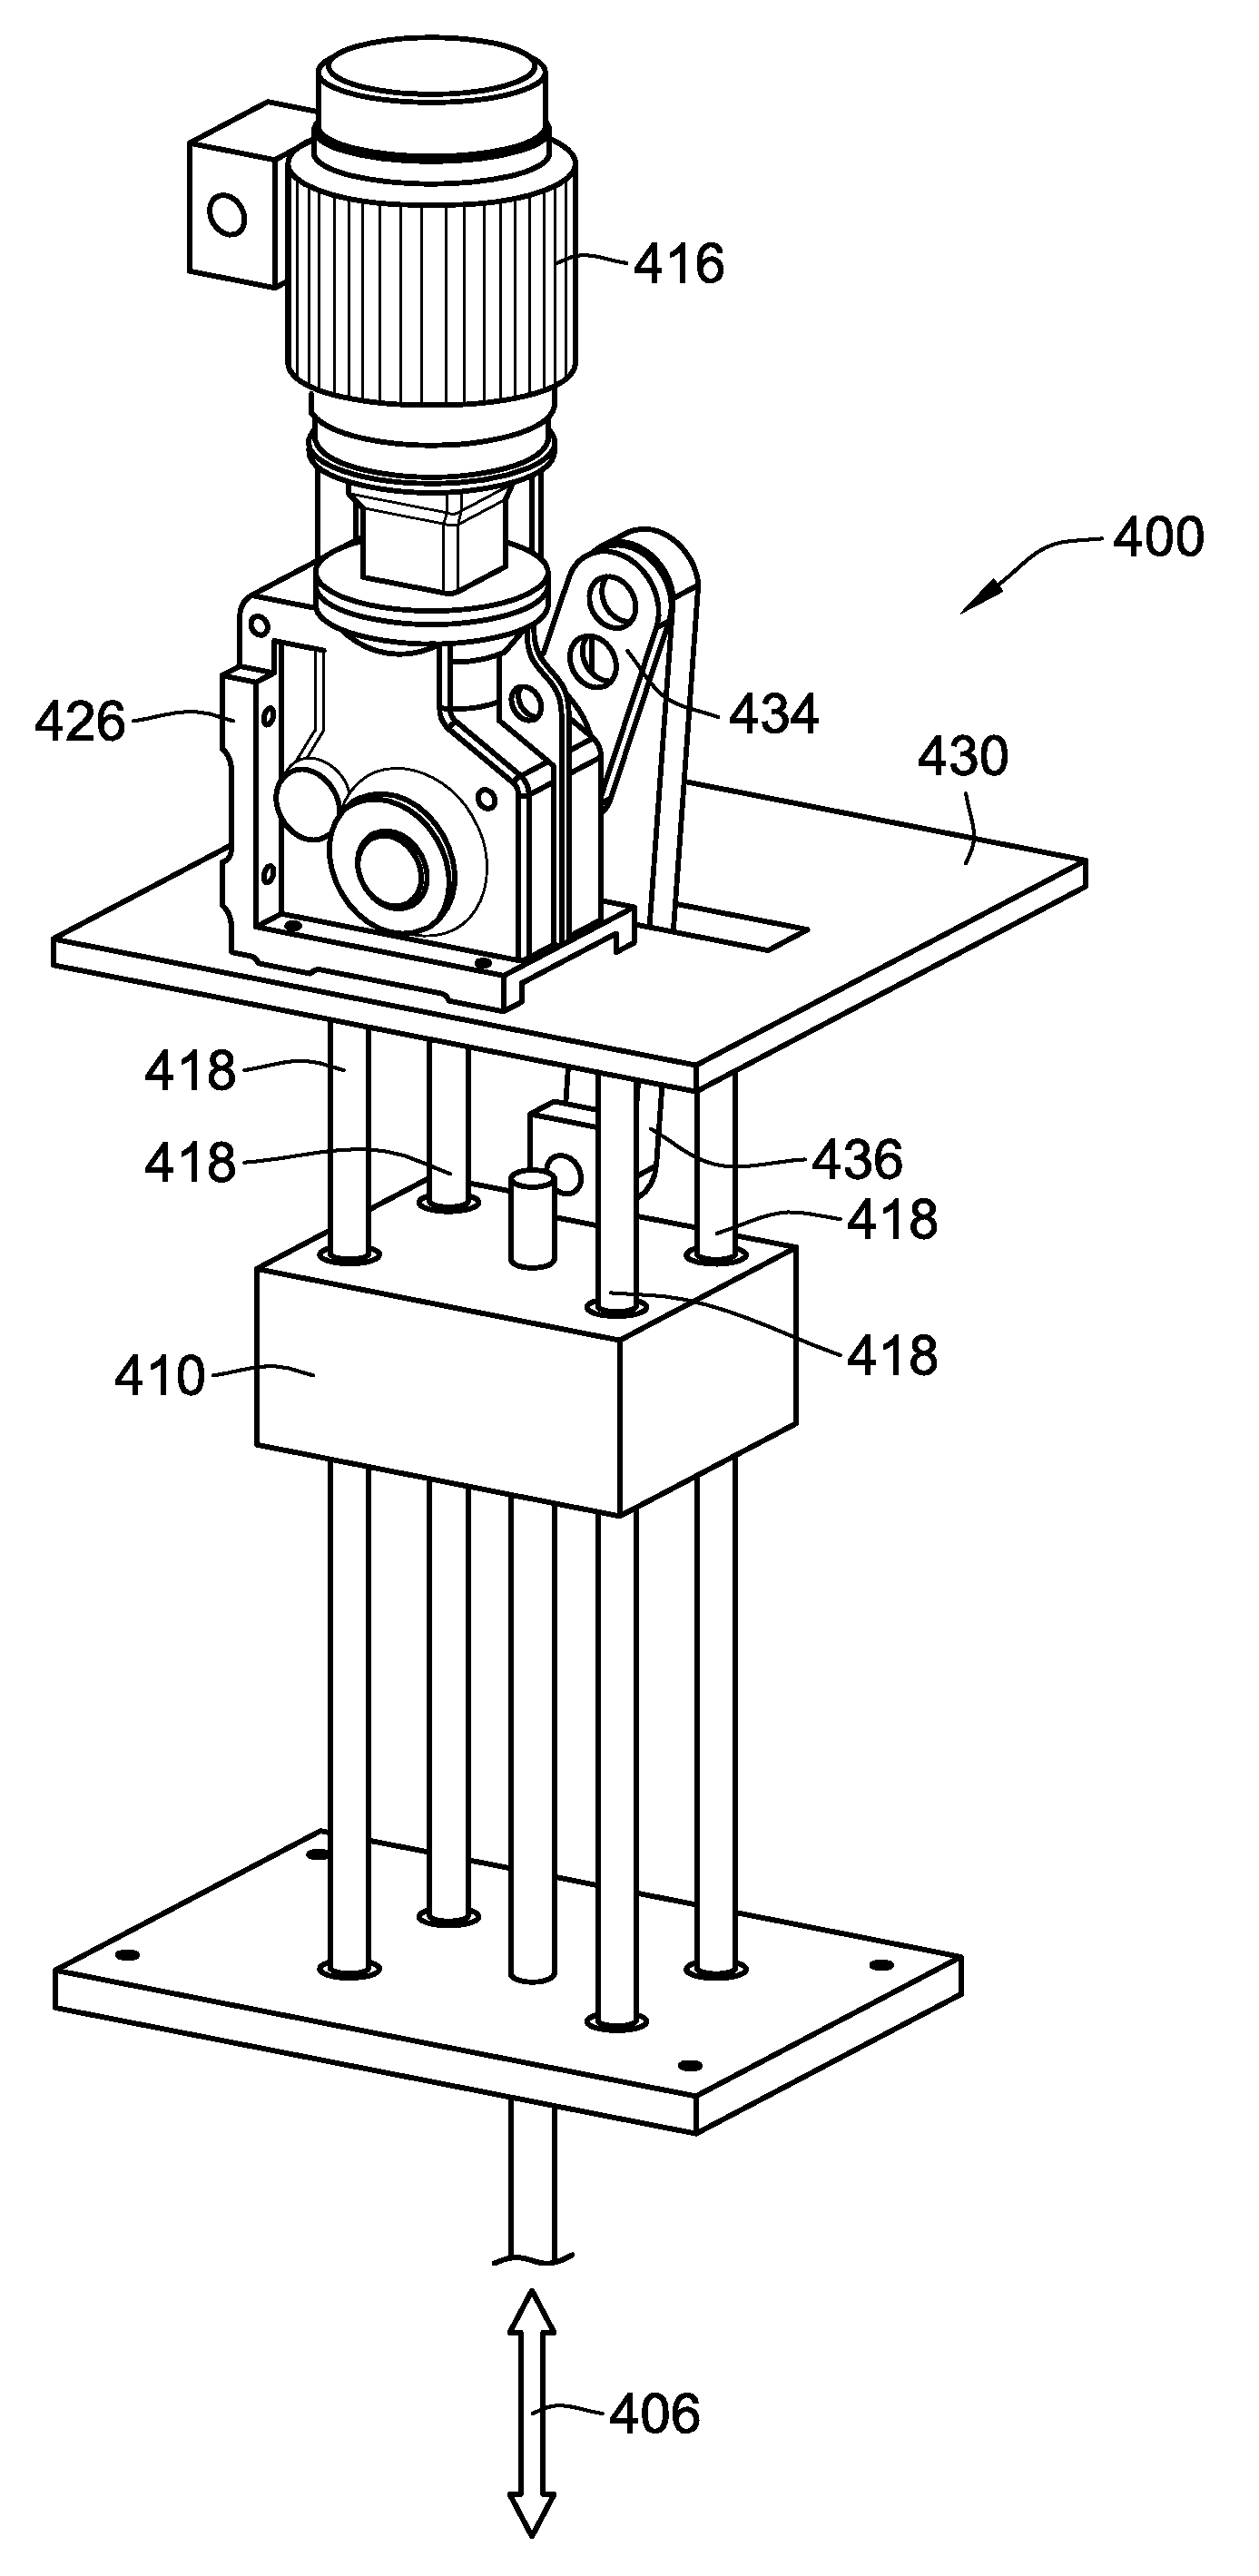 Cranked Rod Pump Apparatus And Method